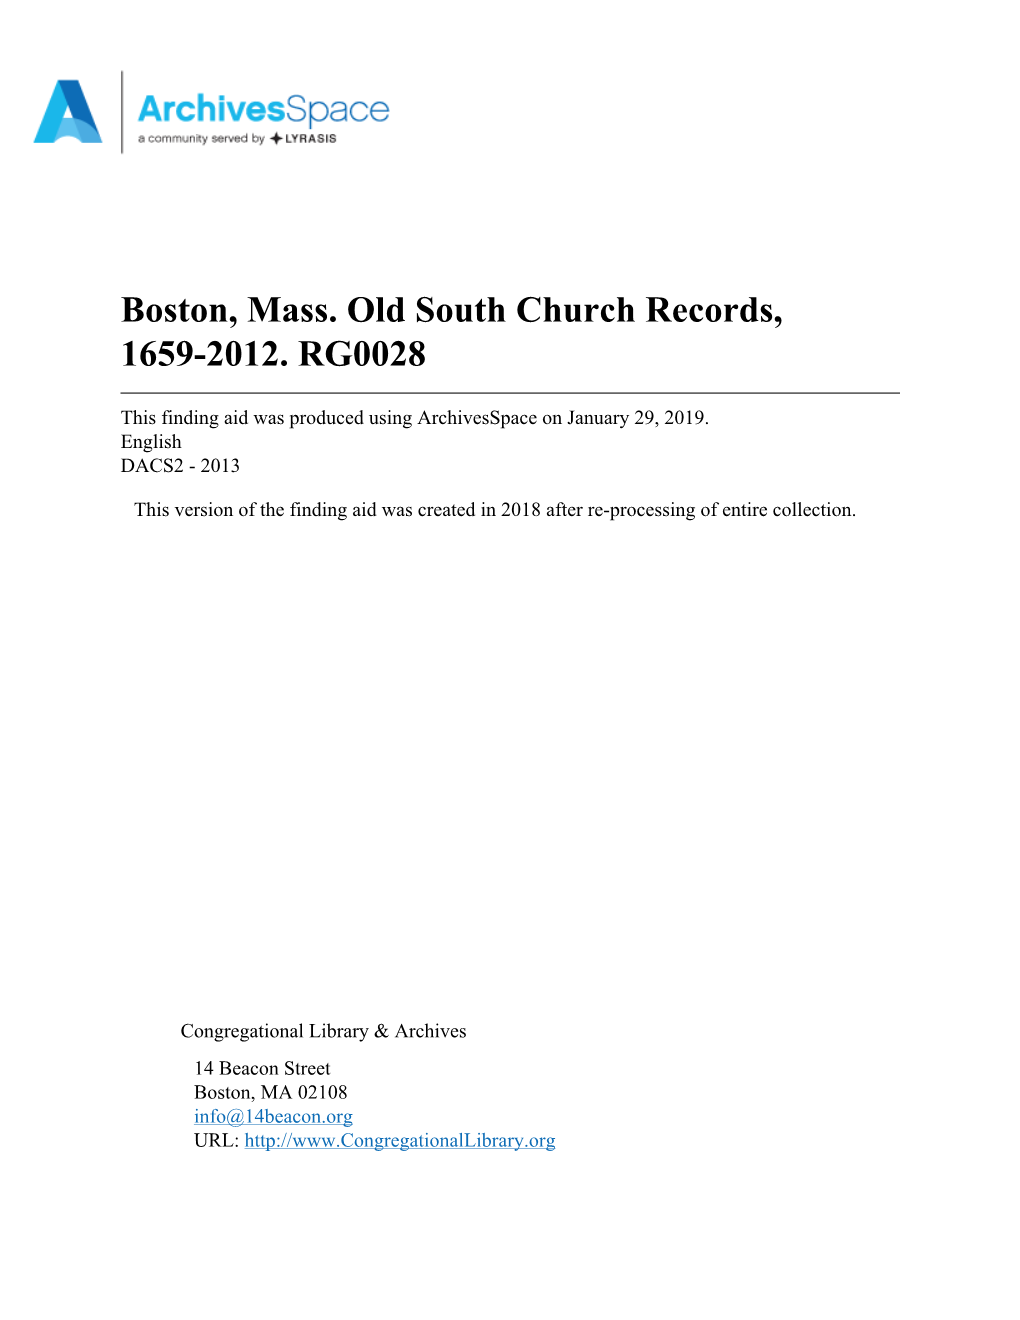 Boston, Mass. Old South Church Records, 1659-2012. RG0028